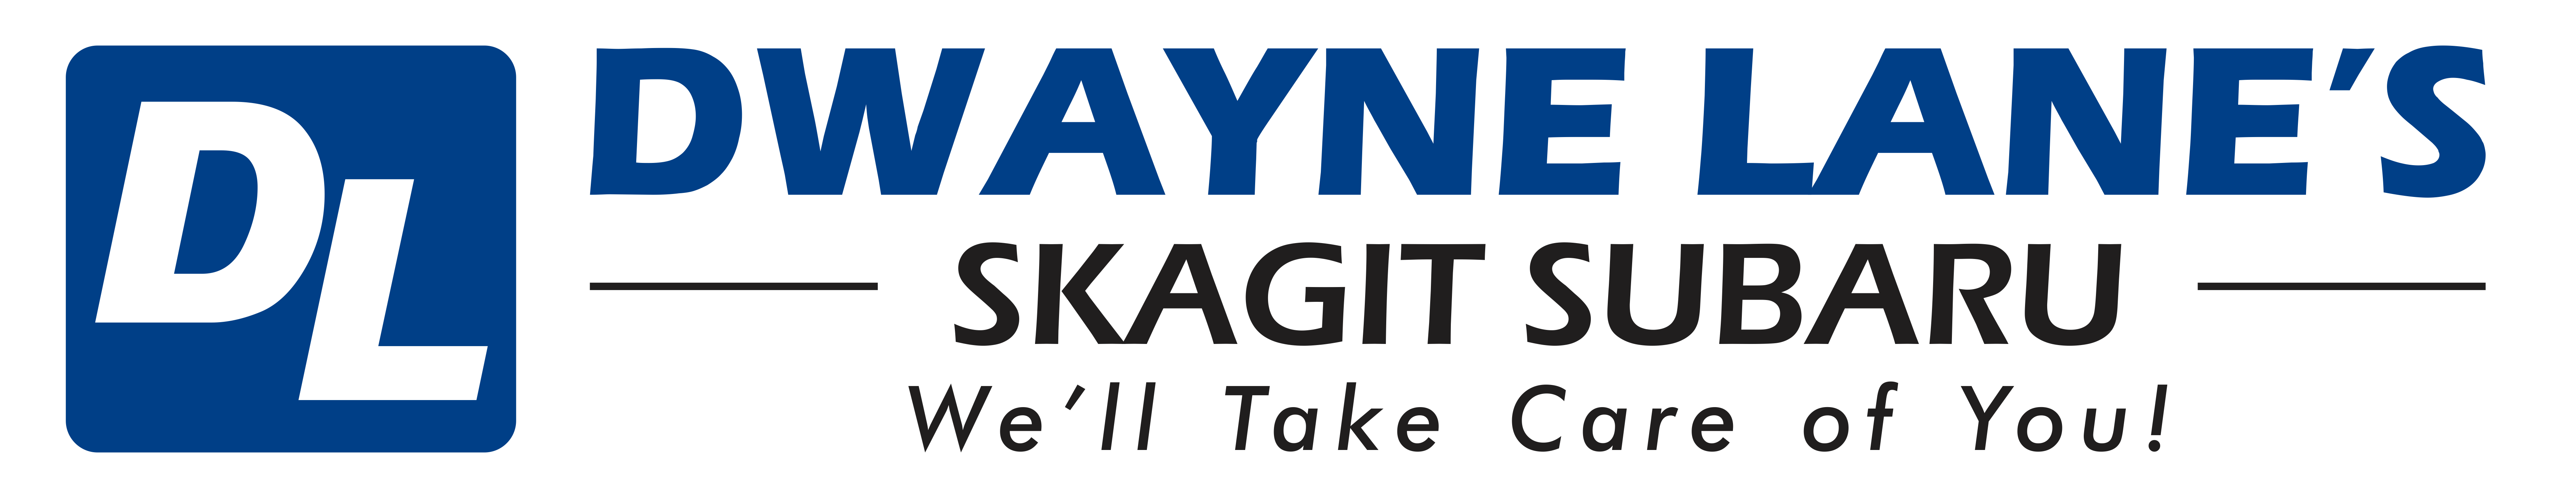 Donor Spotlight: Dwayne Lane's Skagit Subaru